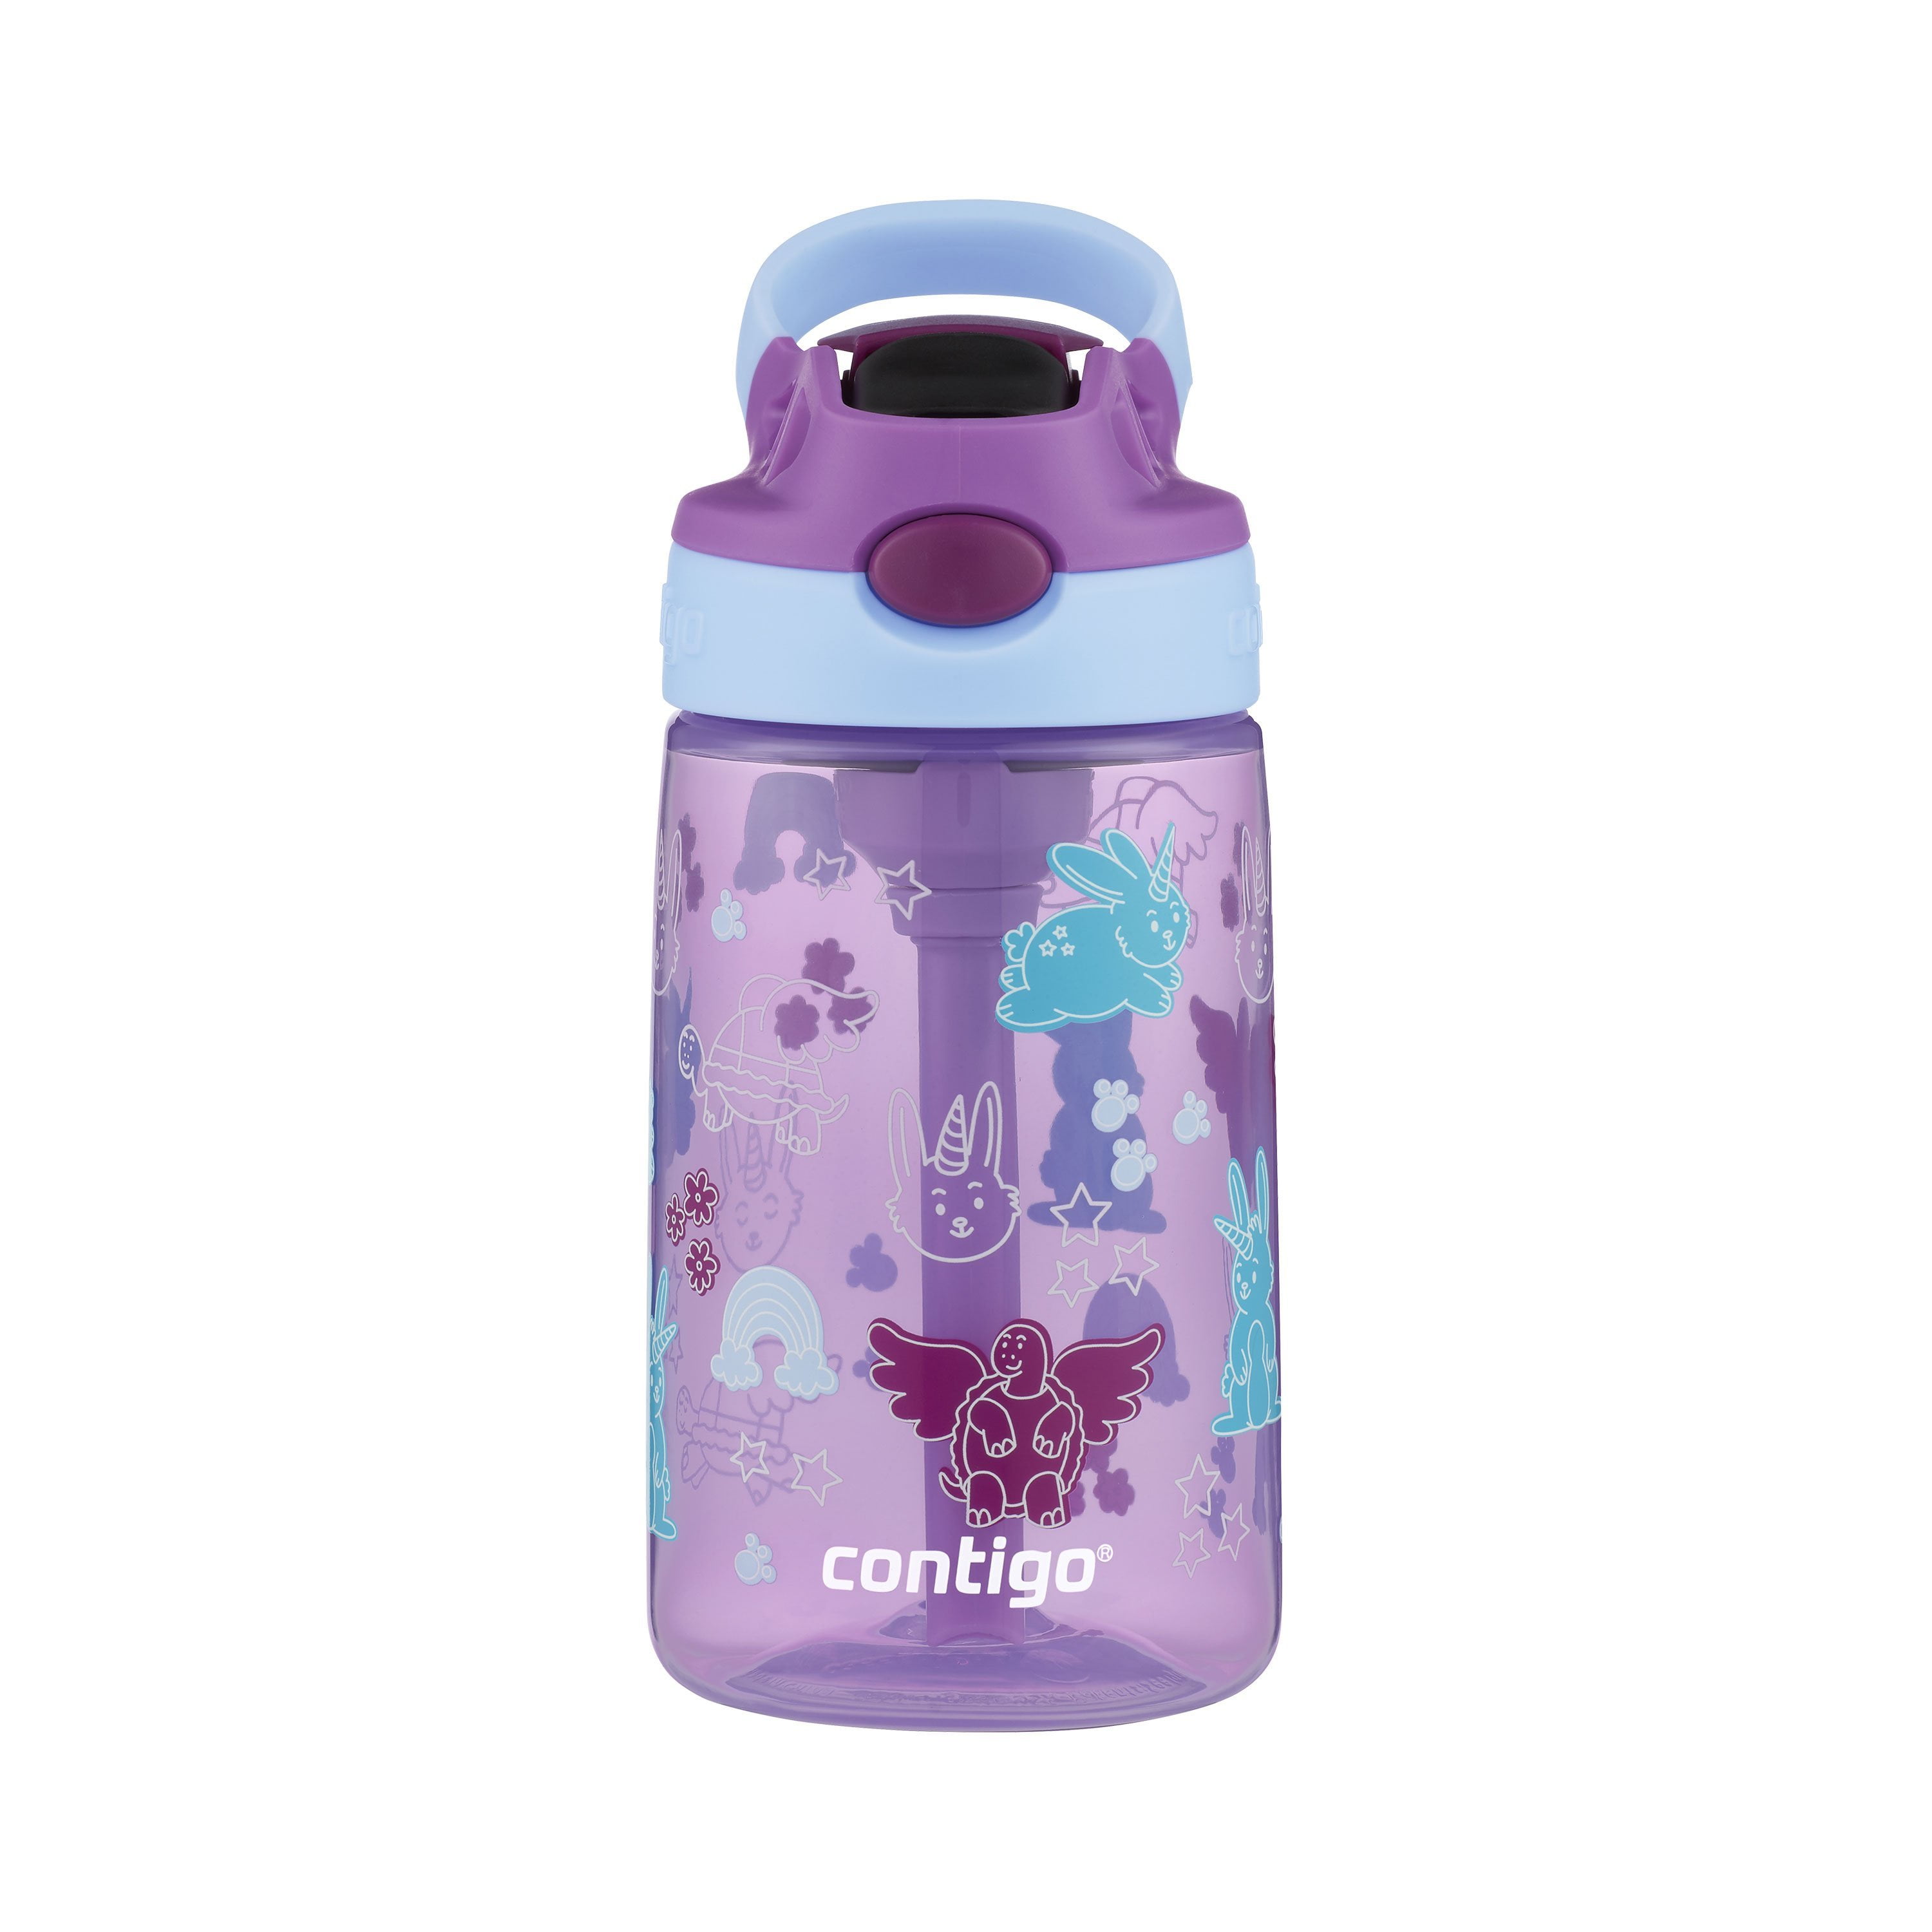 Contigo Kids 2 in 1 Snacker Spill Proof Bottle & Snack Cup Pink Purple